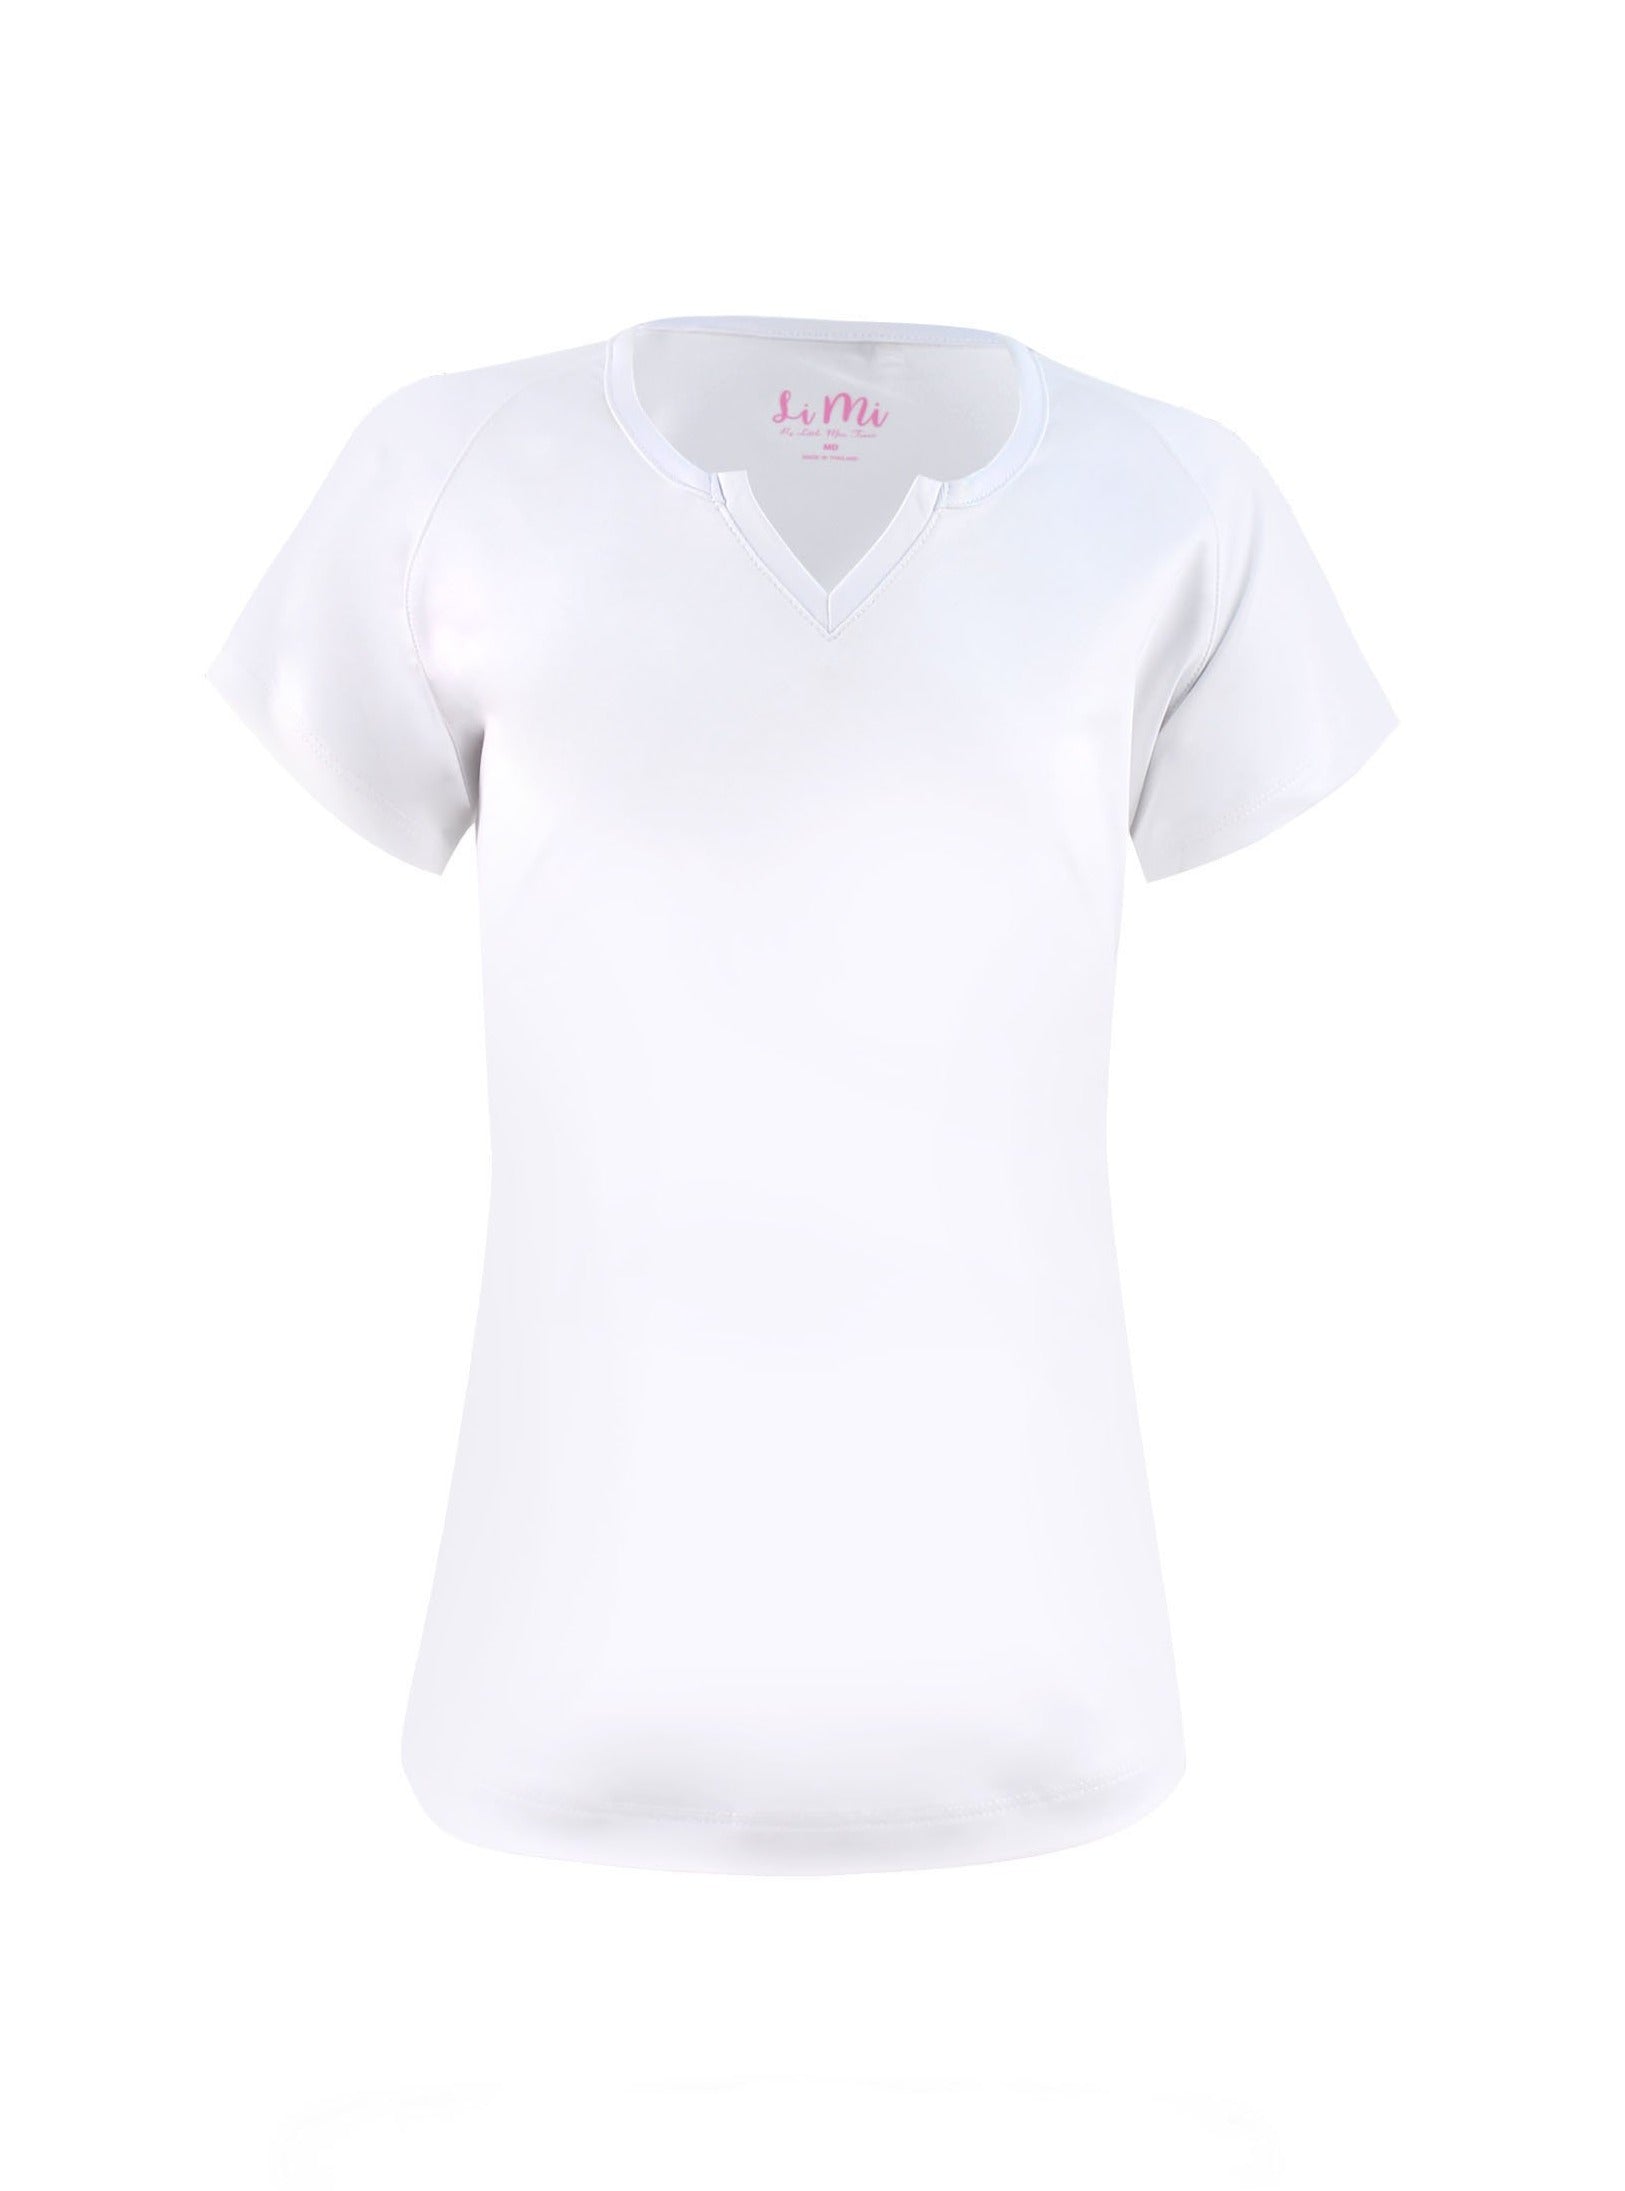 Chamonix White Short Sleeve Top - New! - Little Miss Tennis